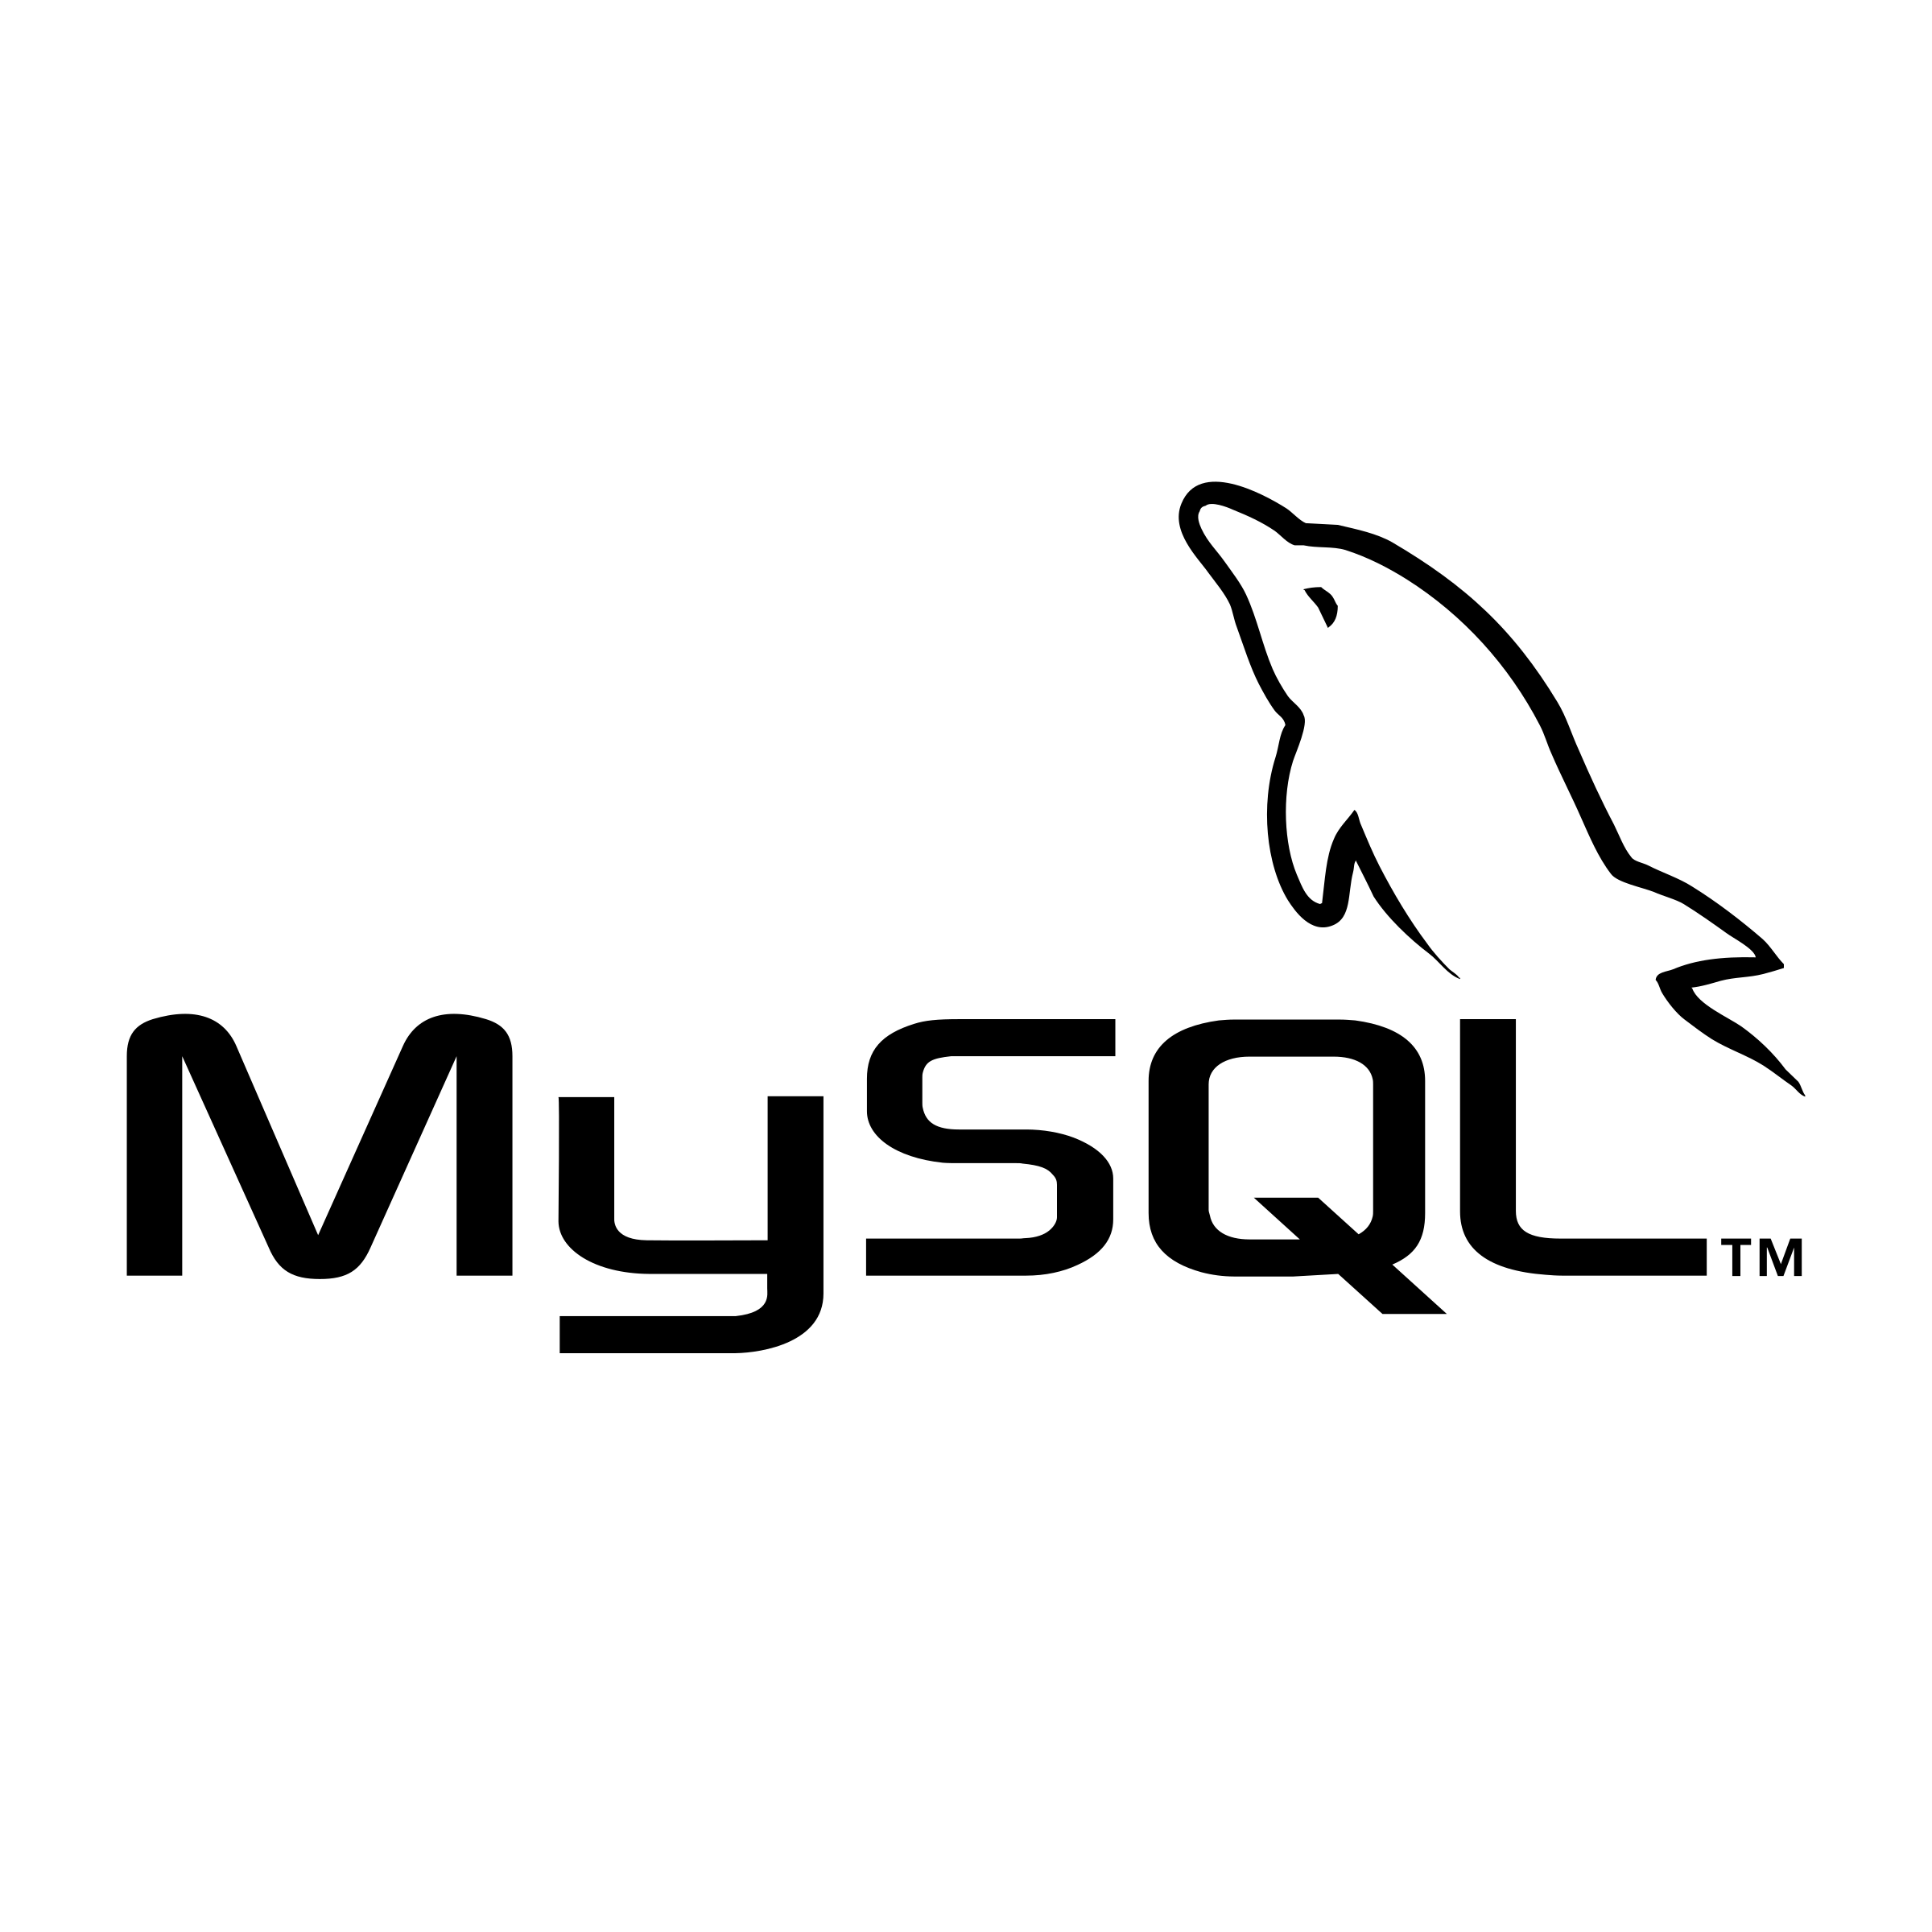 MySQL Logo - MySQL Logo PNG Transparent & SVG Vector - Freebie Supply